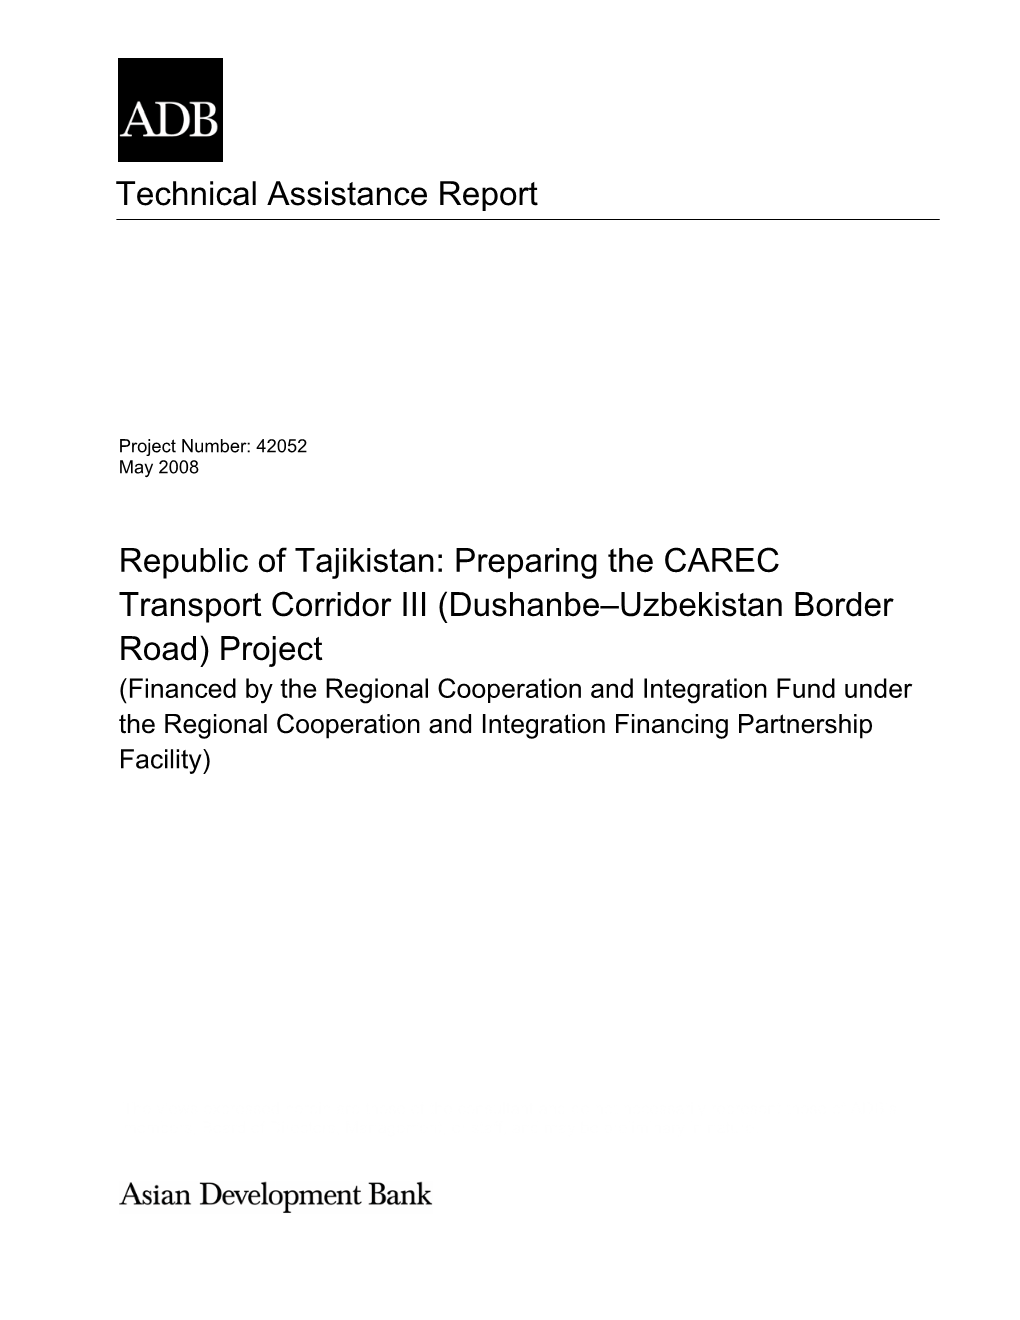 Preparing the CAREC Transport Corridor III (Dushanbe–Uzbekistan